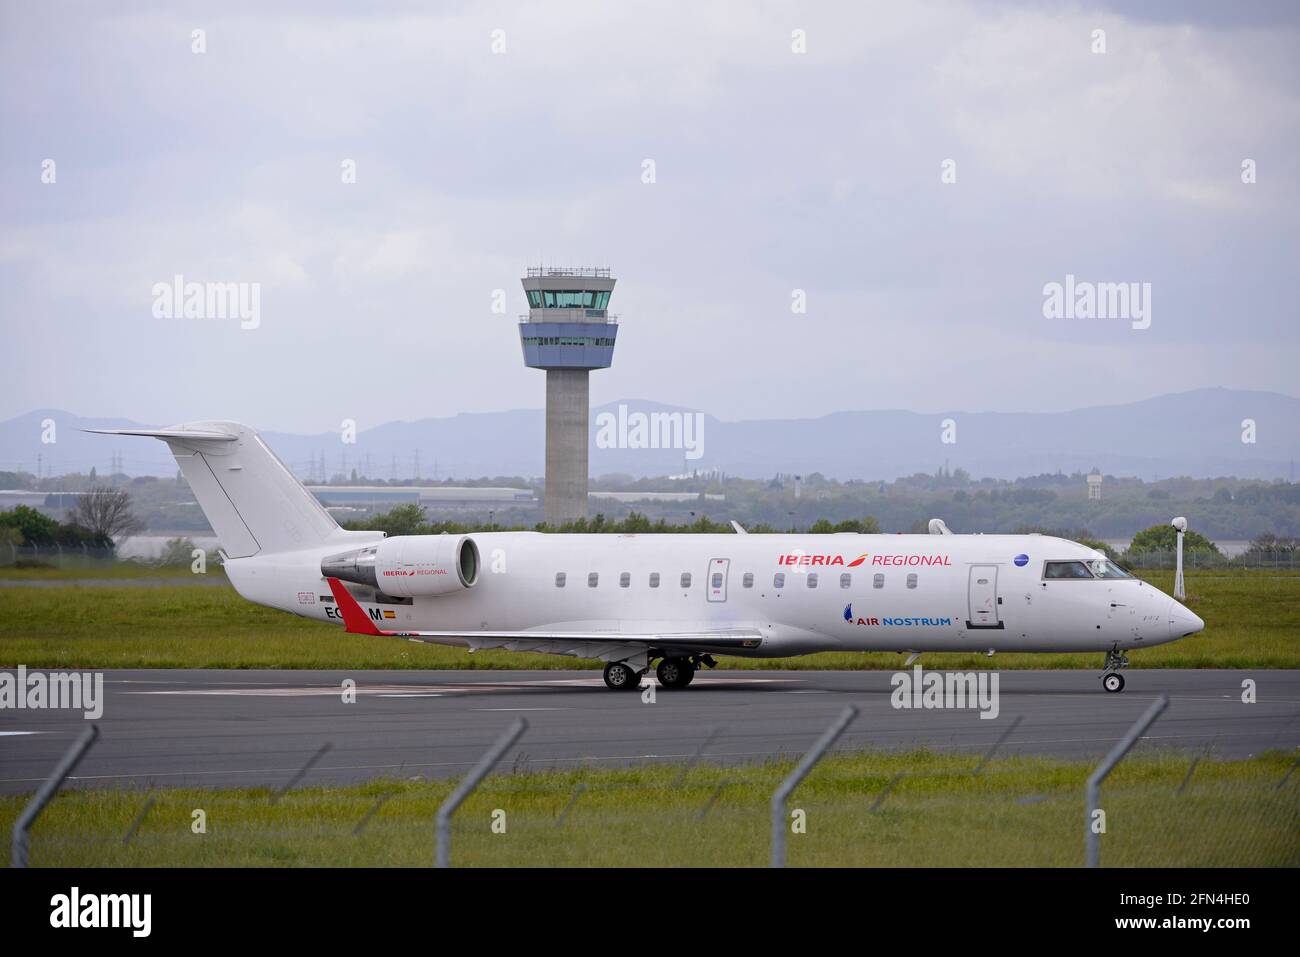 L'EC-NLM D'AIR NOSTRUM, un Bombardier CRJ-200, arrive à L'AÉROPORT JOHN LENNON DE LIVERPOOL, À MERSEYSIDE, EN ANGLETERRE Banque D'Images